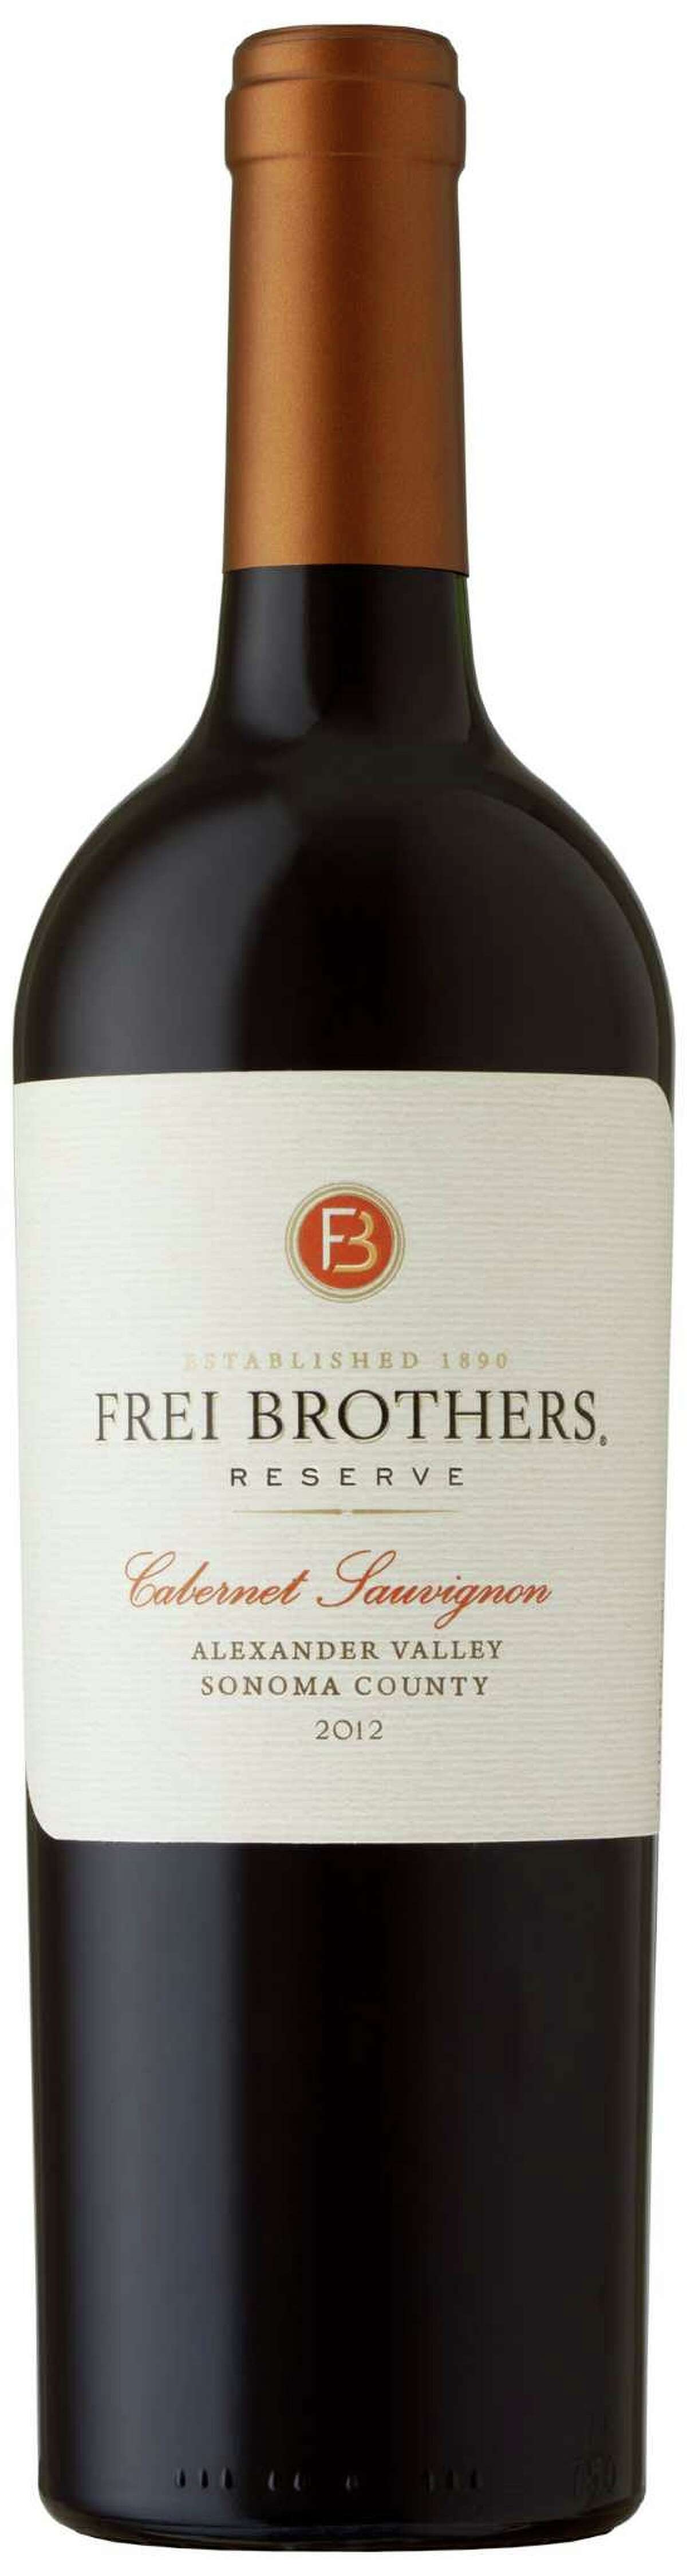 2012 Frei Brothers Cabernet Sauvignon